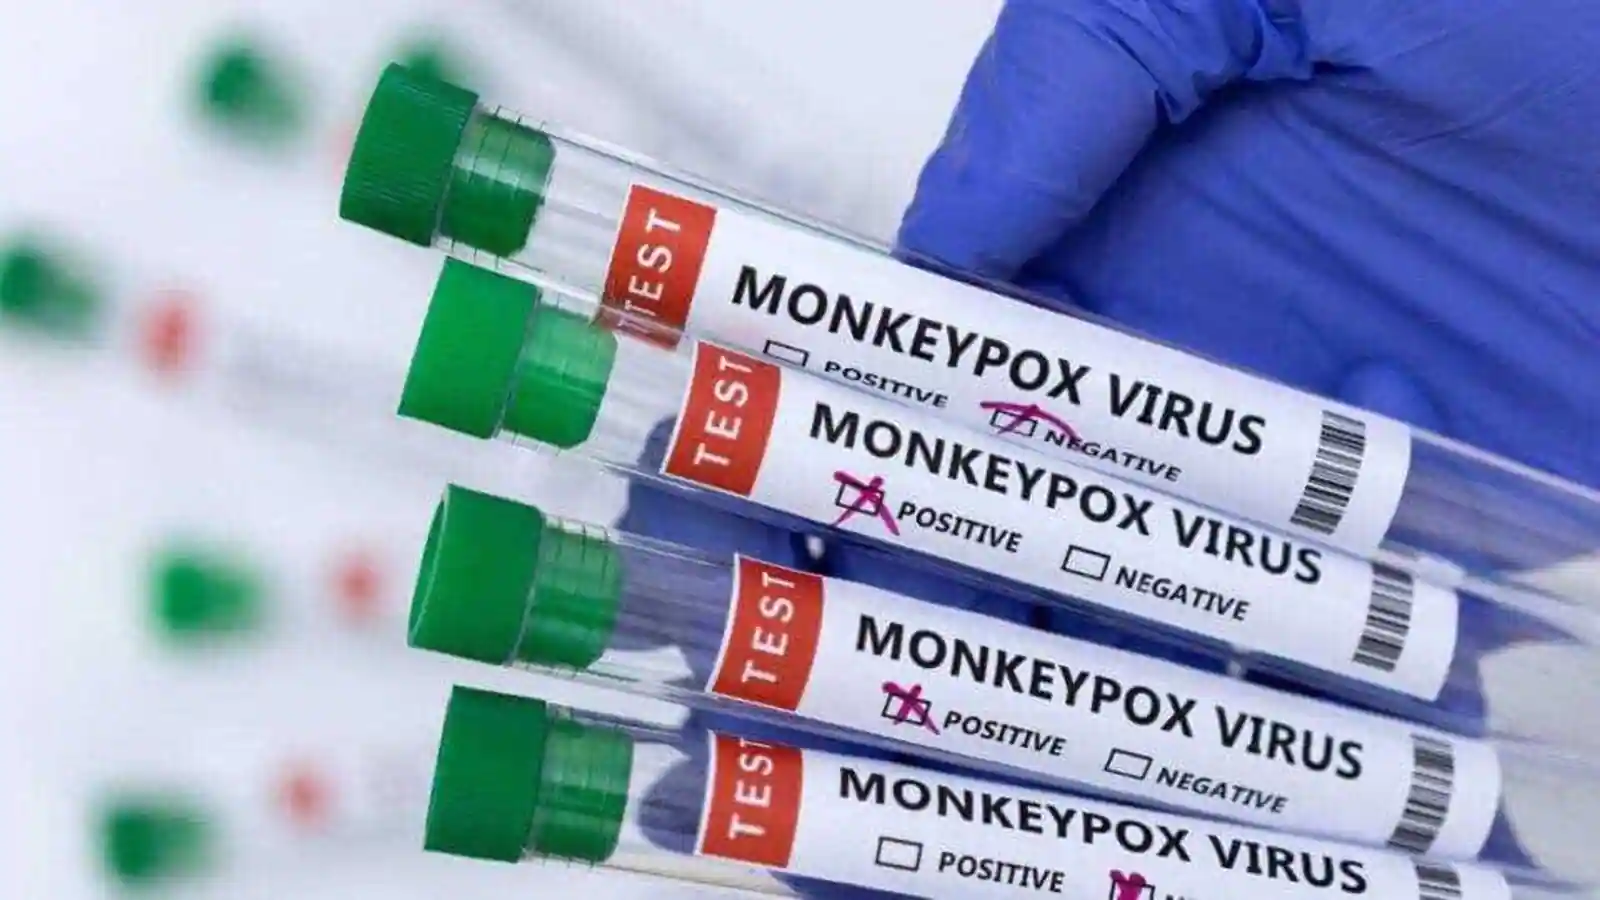 bforblogs WHO gives new name to Monkeypox virus